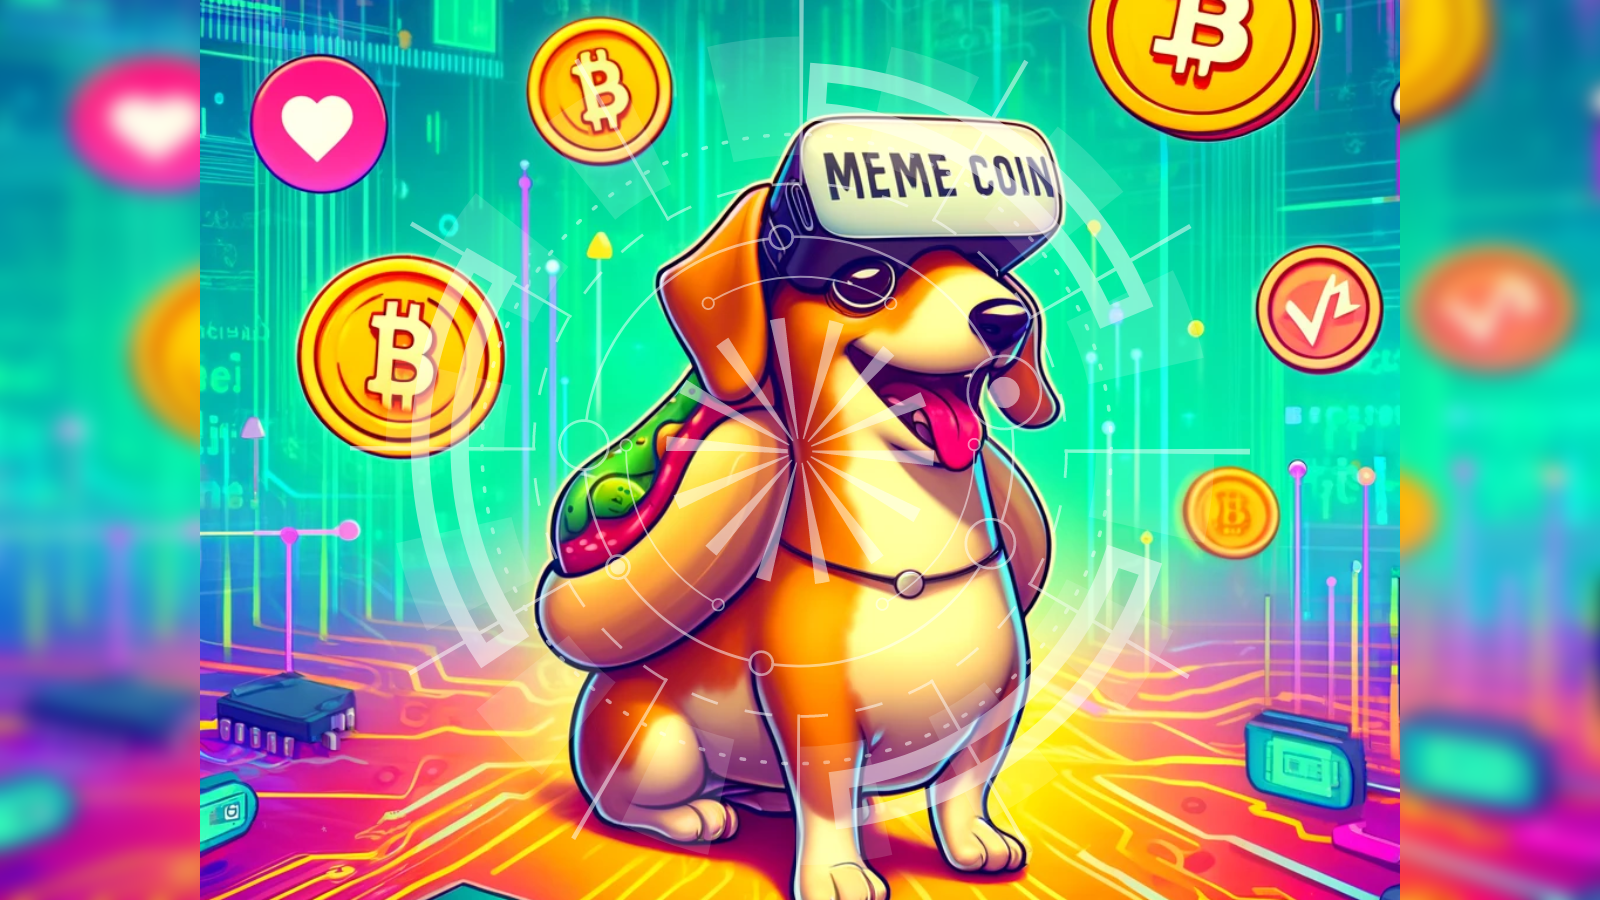 Meme coin with AI superpowers: WienerAI breaks past $1.5 million milestone  in hot presale - The Economic Times